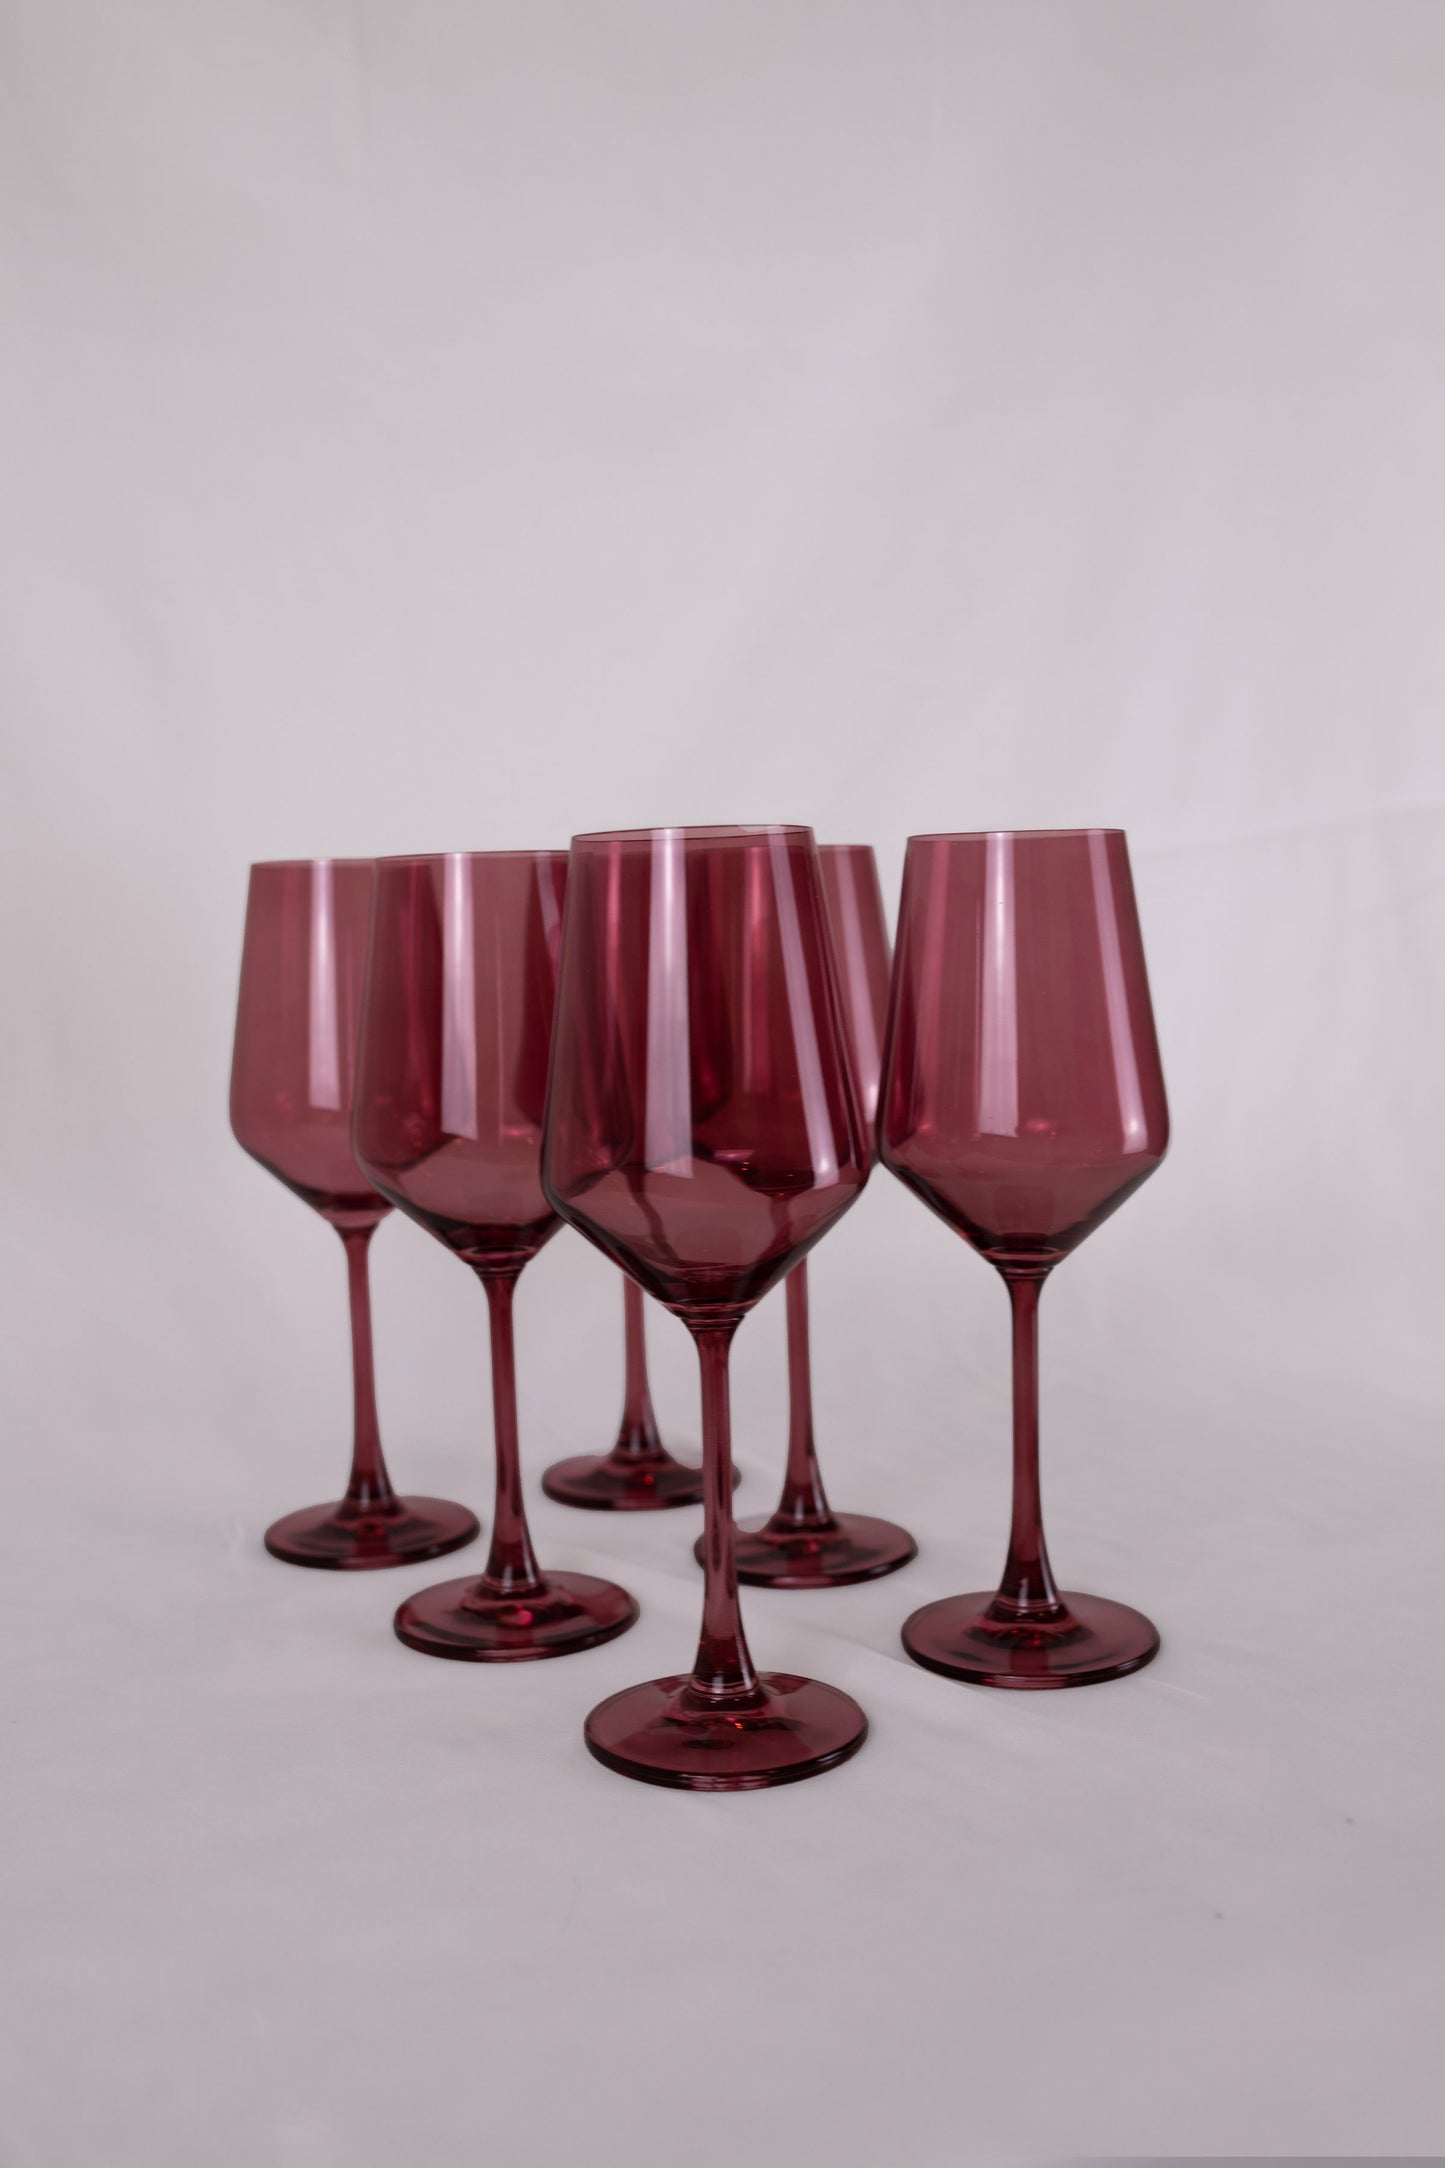 Mauvelous Wine Glasses - Set of 6